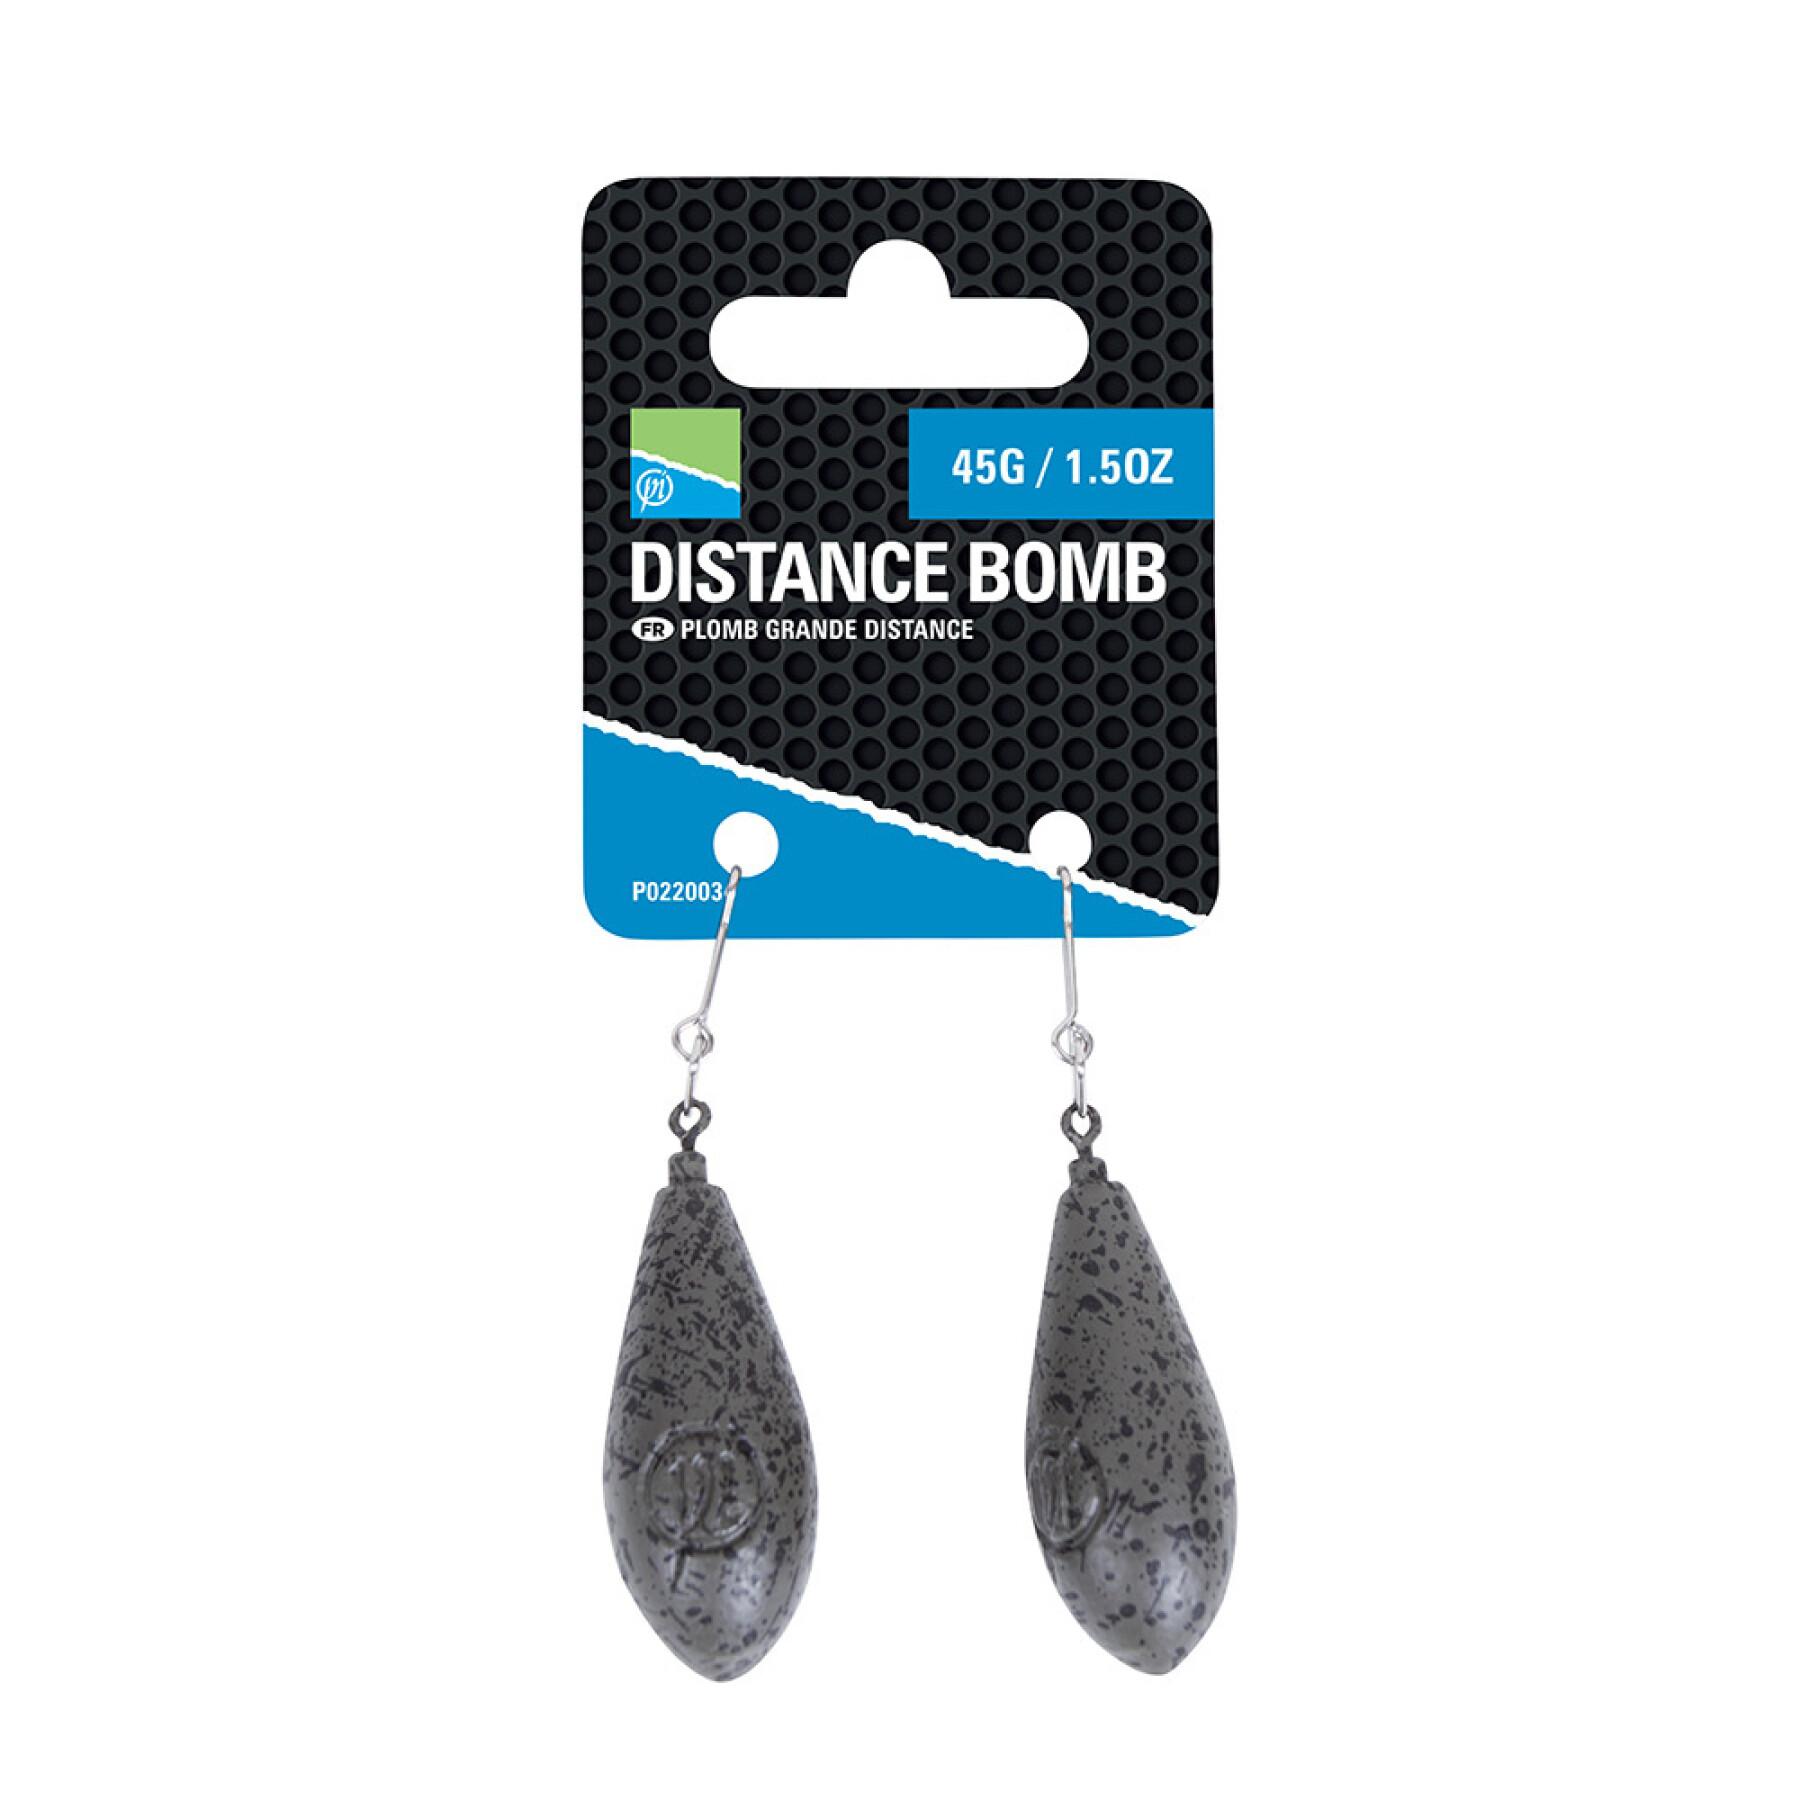 Piombo Preston distance bomb 20g 2x5